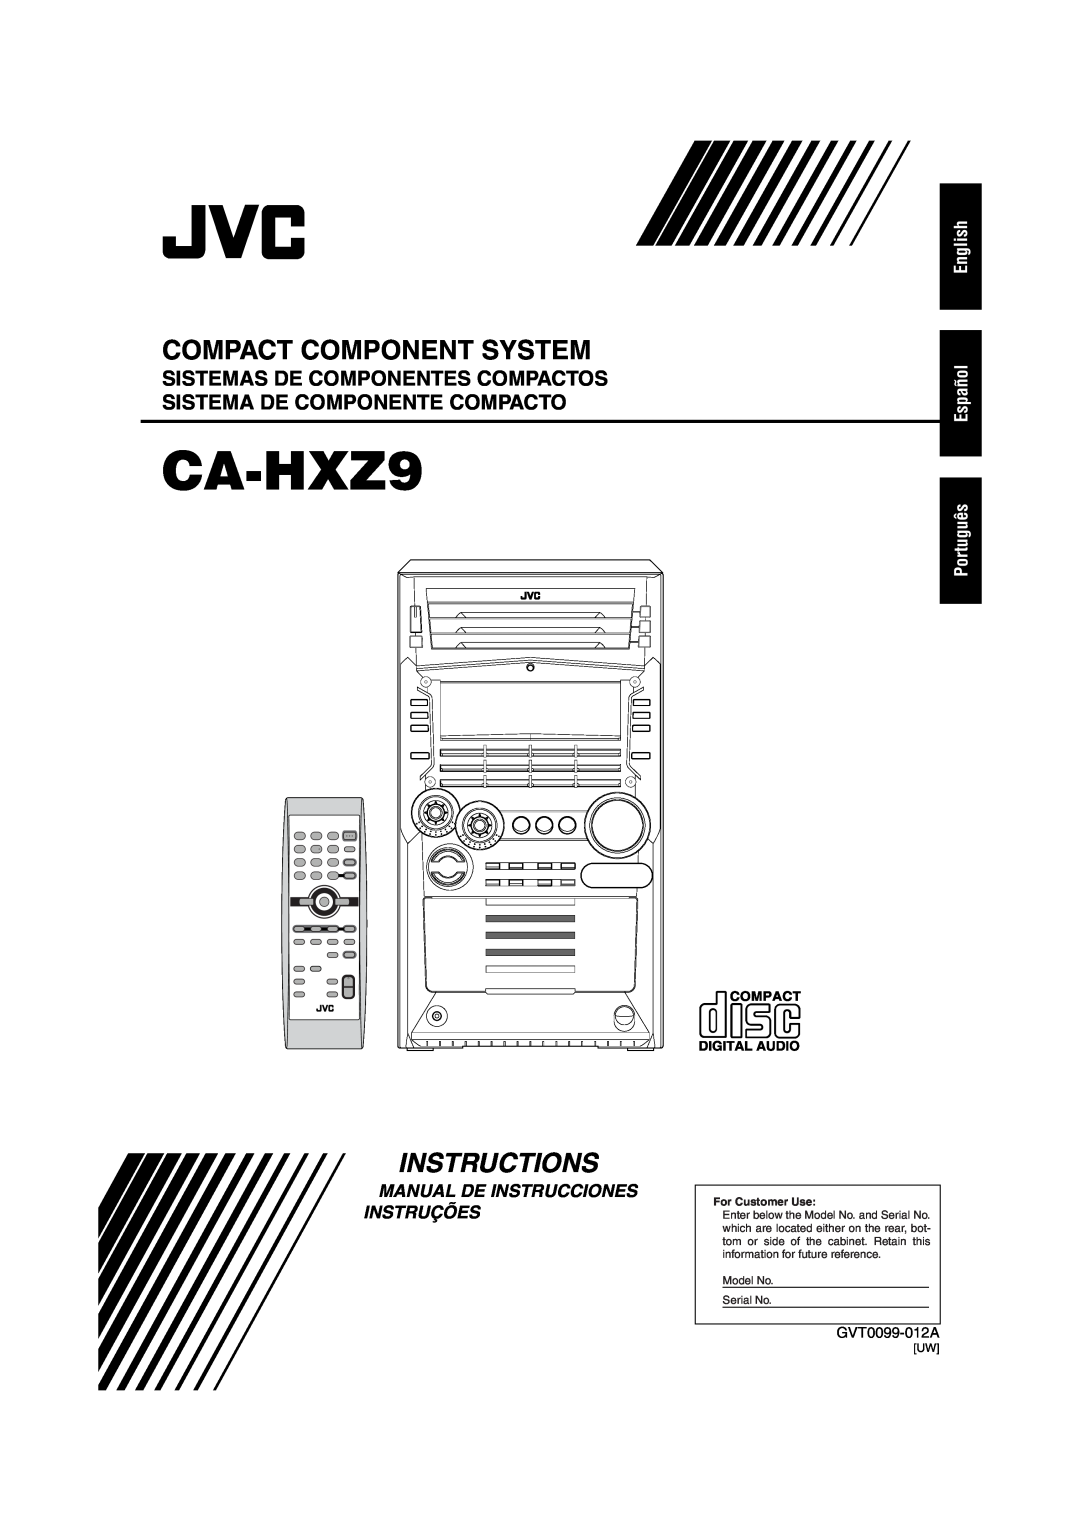 JVC CA-HXZ9 manual English, Español, Português, Compact Component System, Instructions, Manual De Instrucciones Instruções 